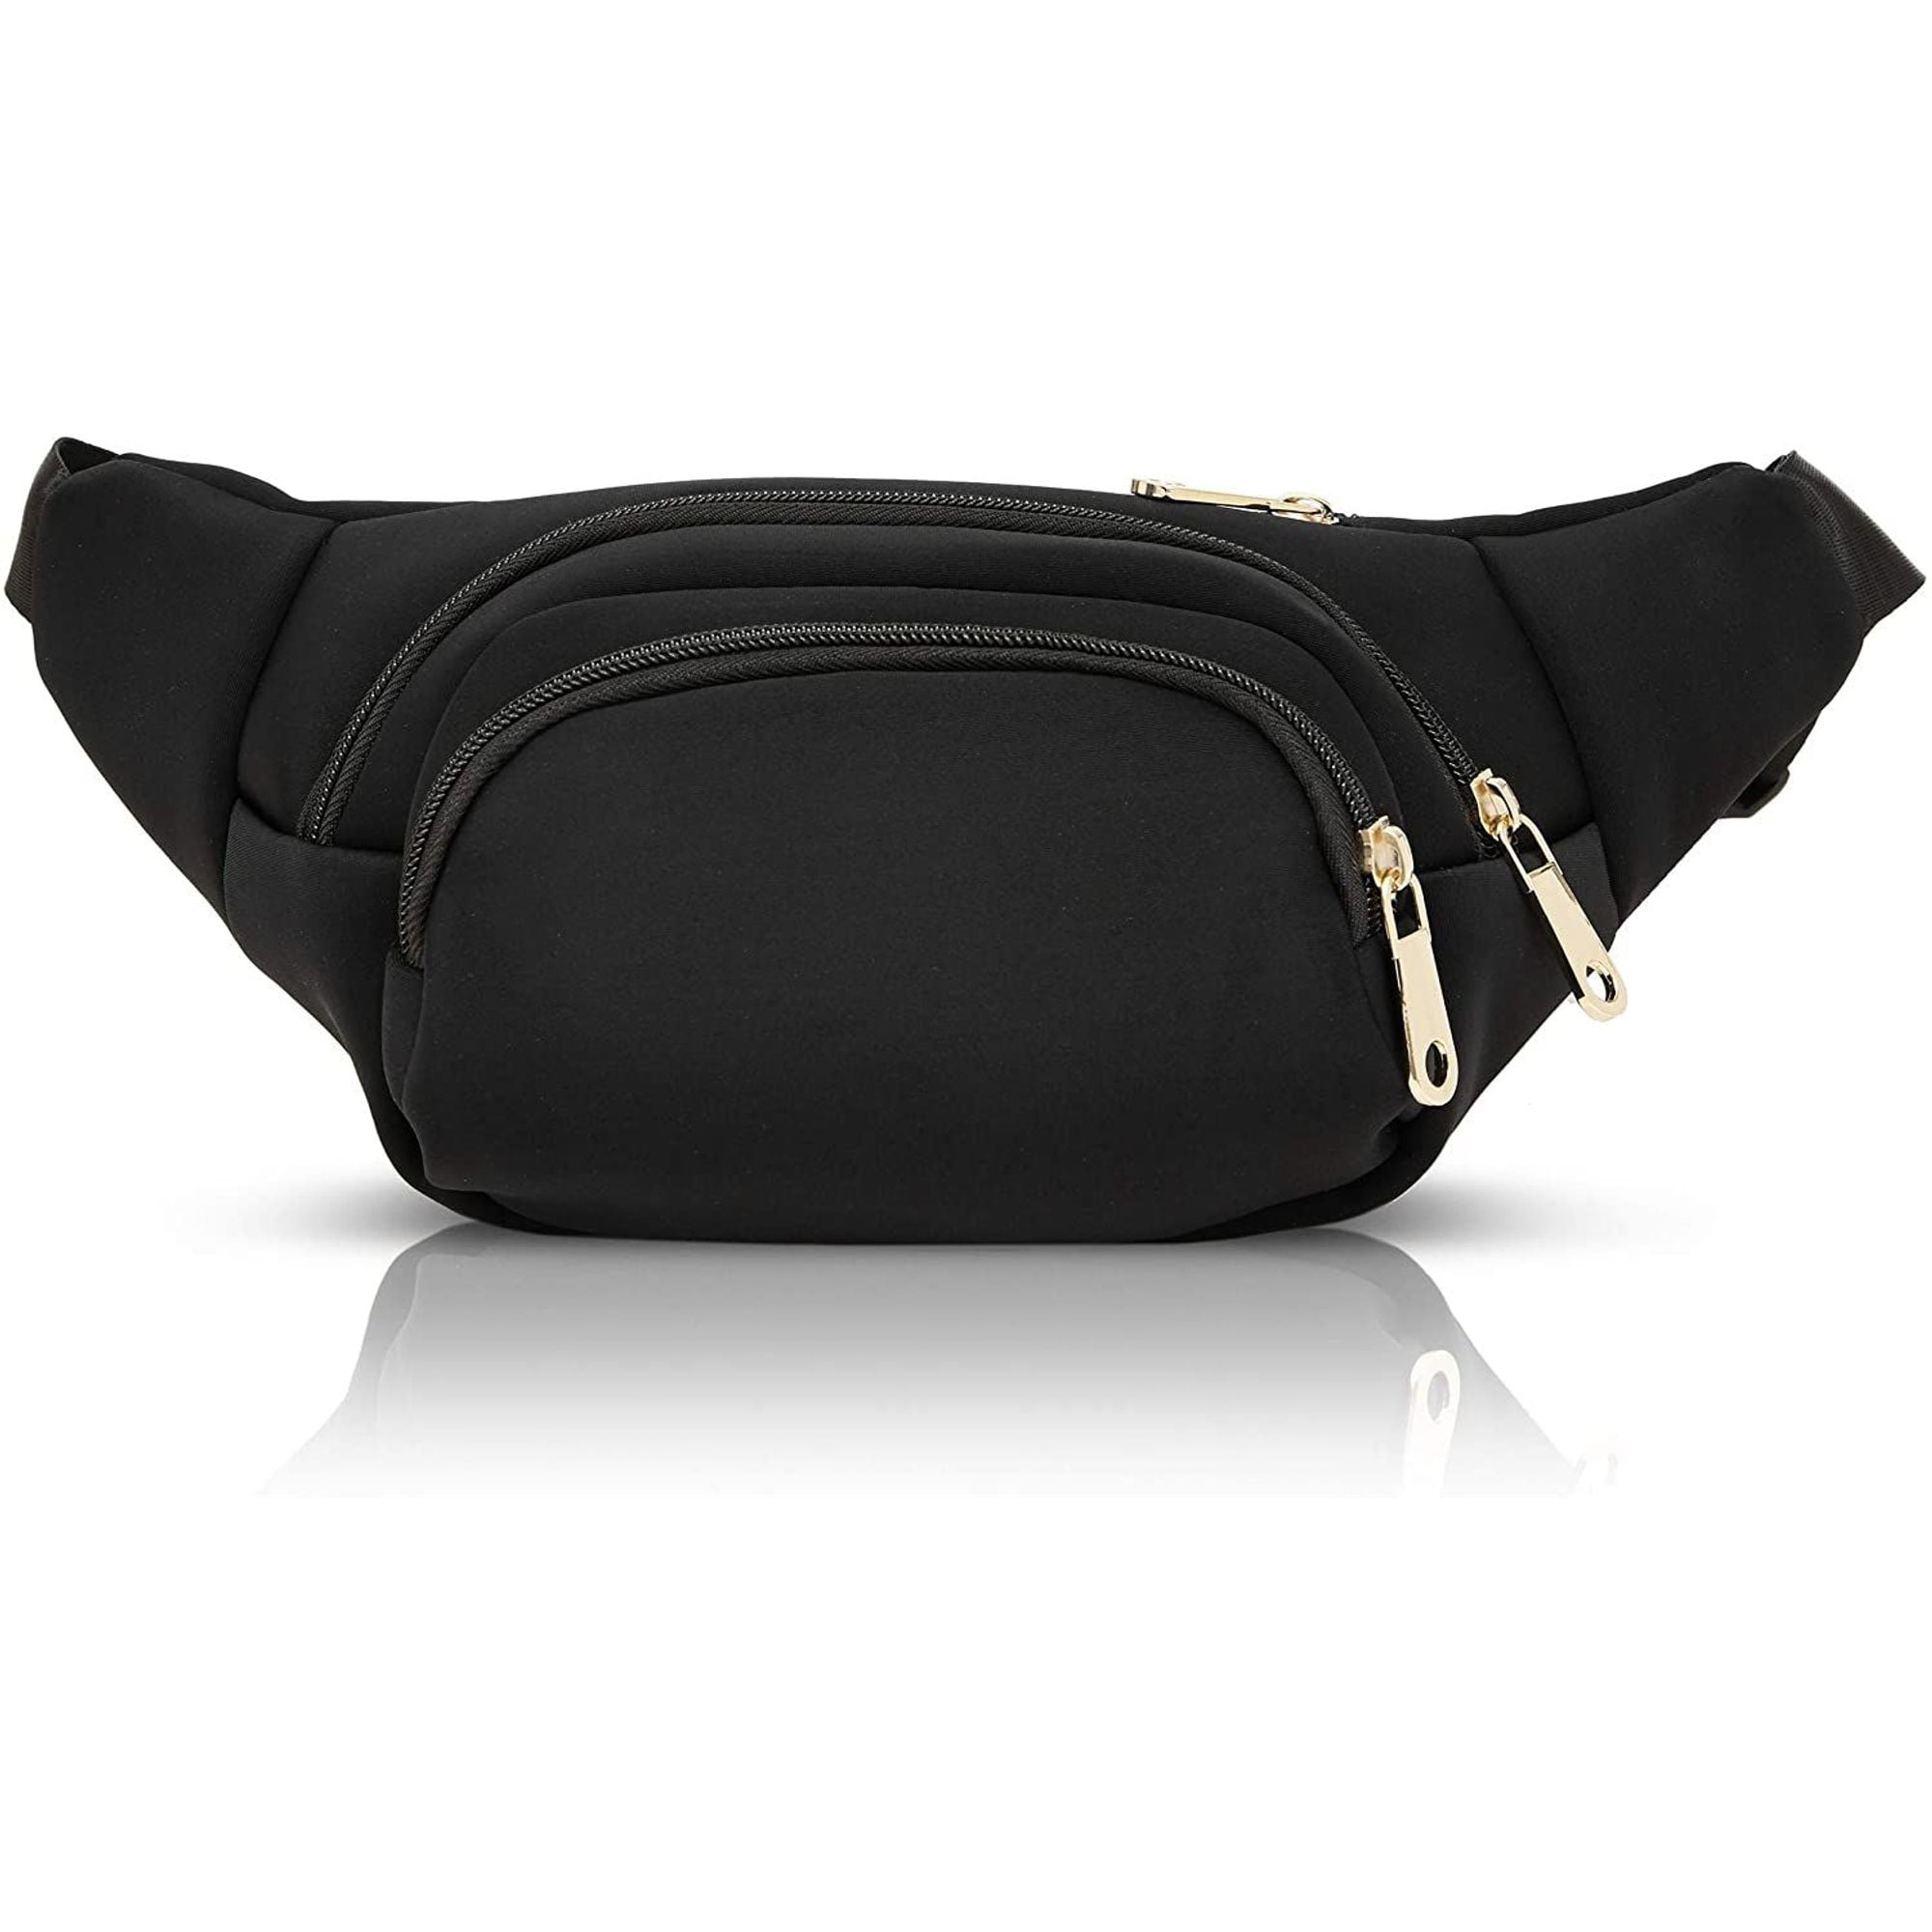 BLACK Waist BUM BAG travel GOOD quality 4 zips Mens Ladies Unisex 